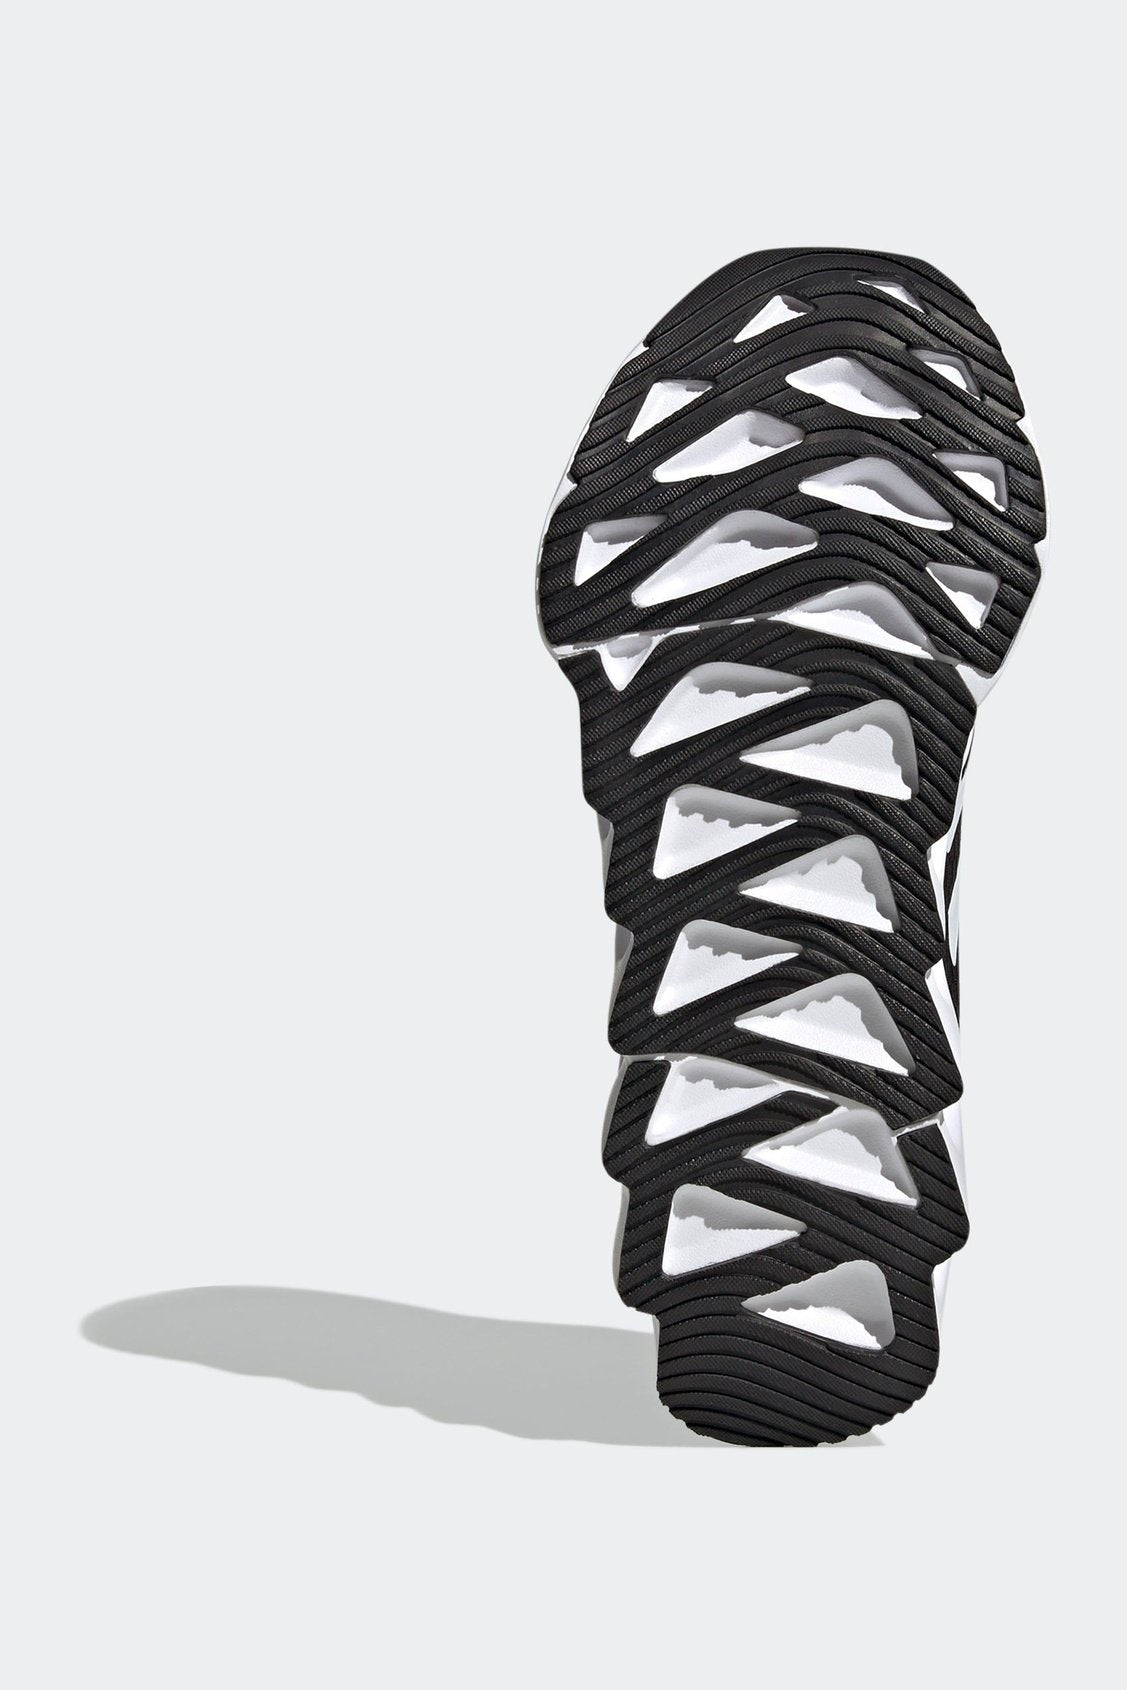 ADIDAS - נעלי ספורט לנשים SWITCH RUN בצבע שחור ולבן - MASHBIR//365